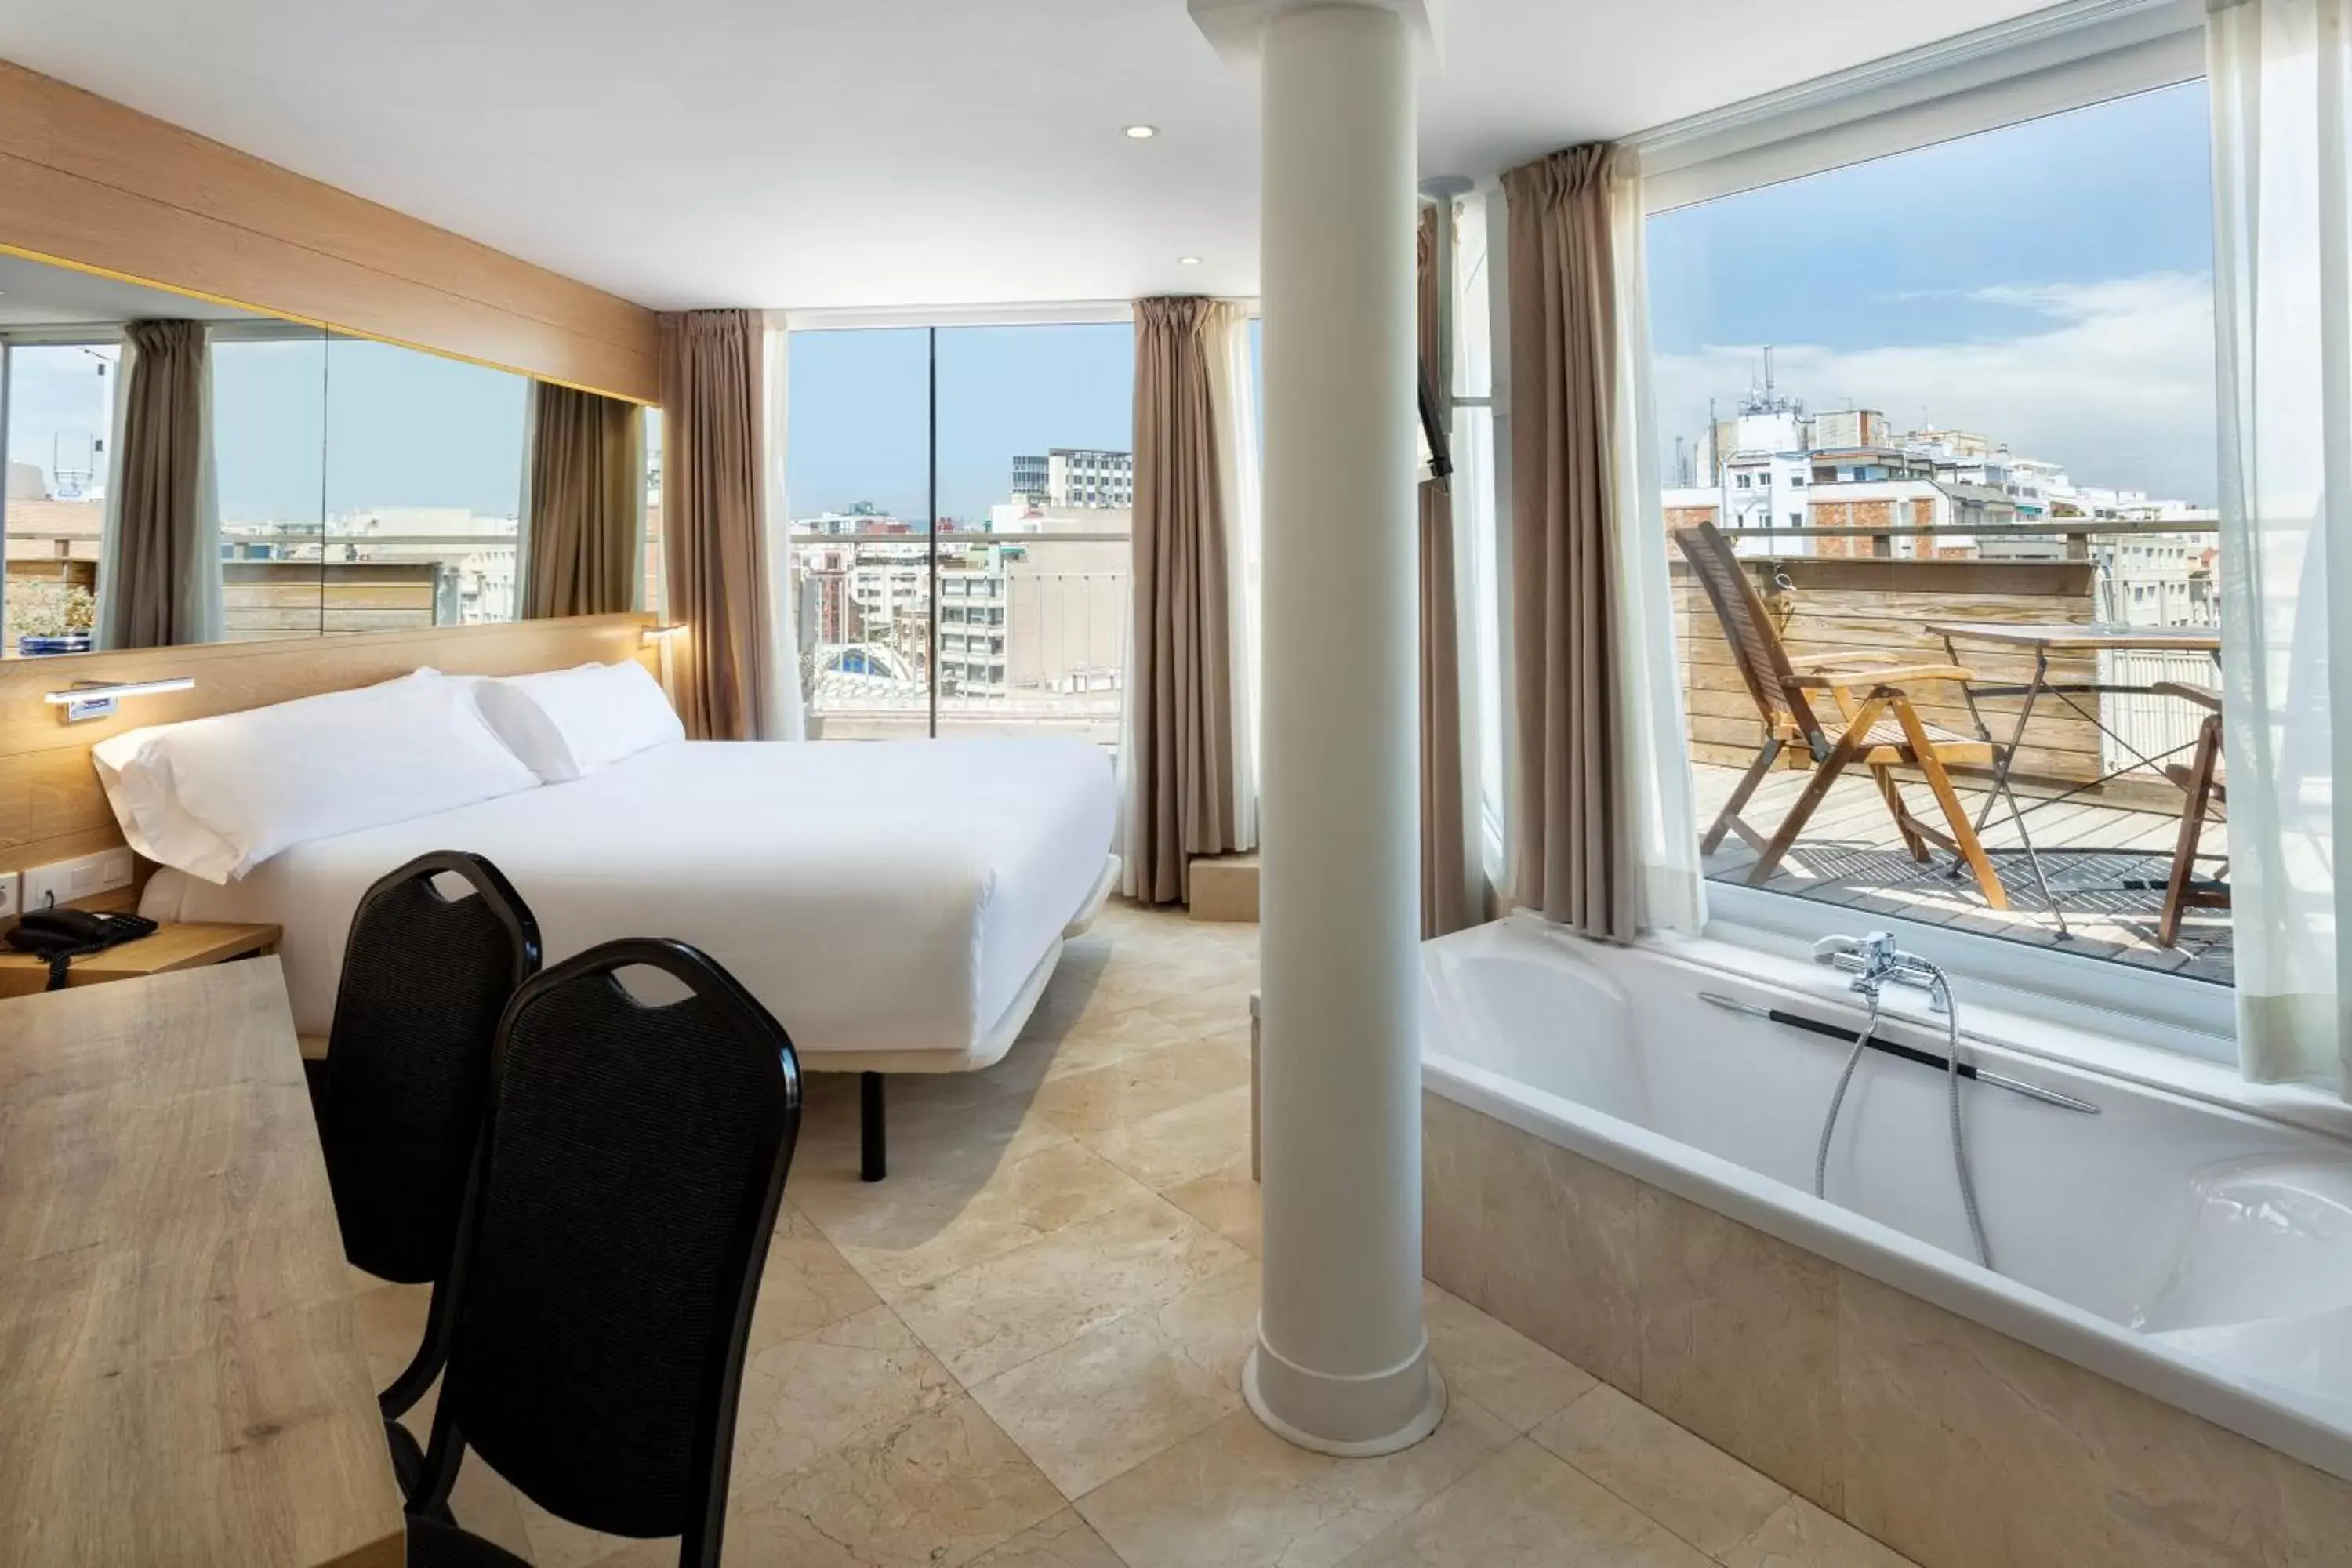 Bed in B&B HOTEL Tarragona Centro Urbis